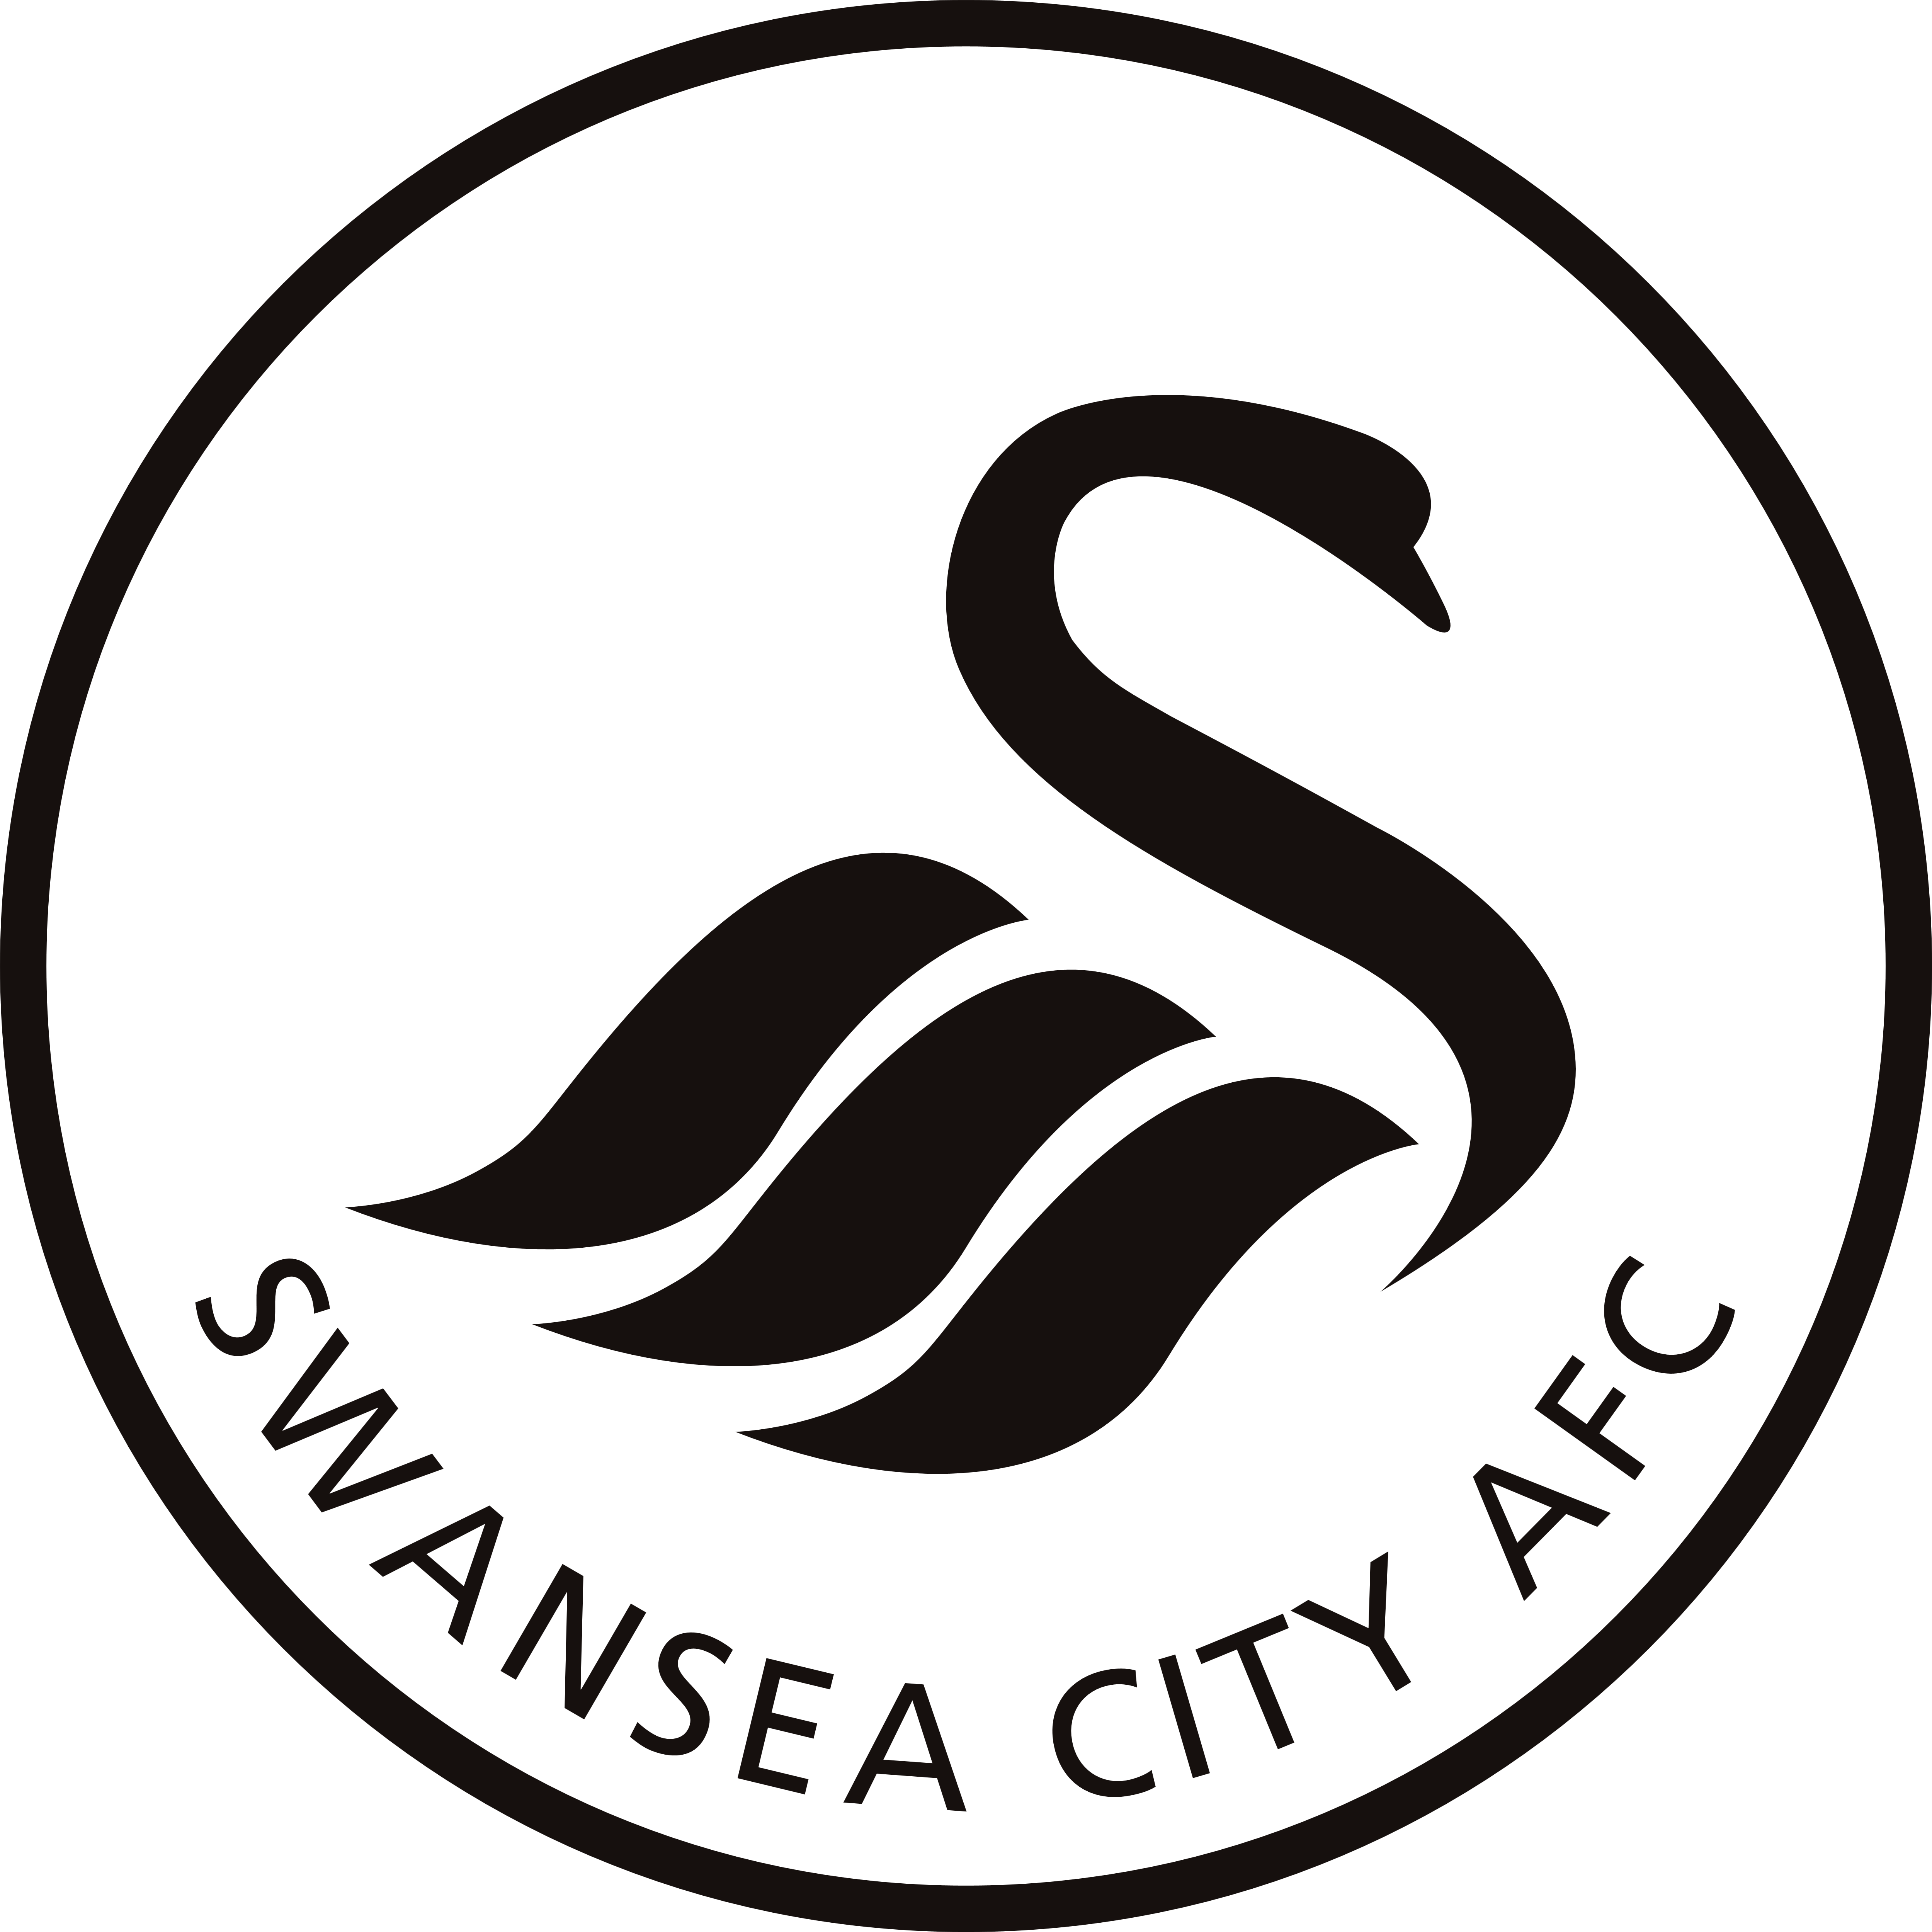 Swansea City AFC - Logos Download